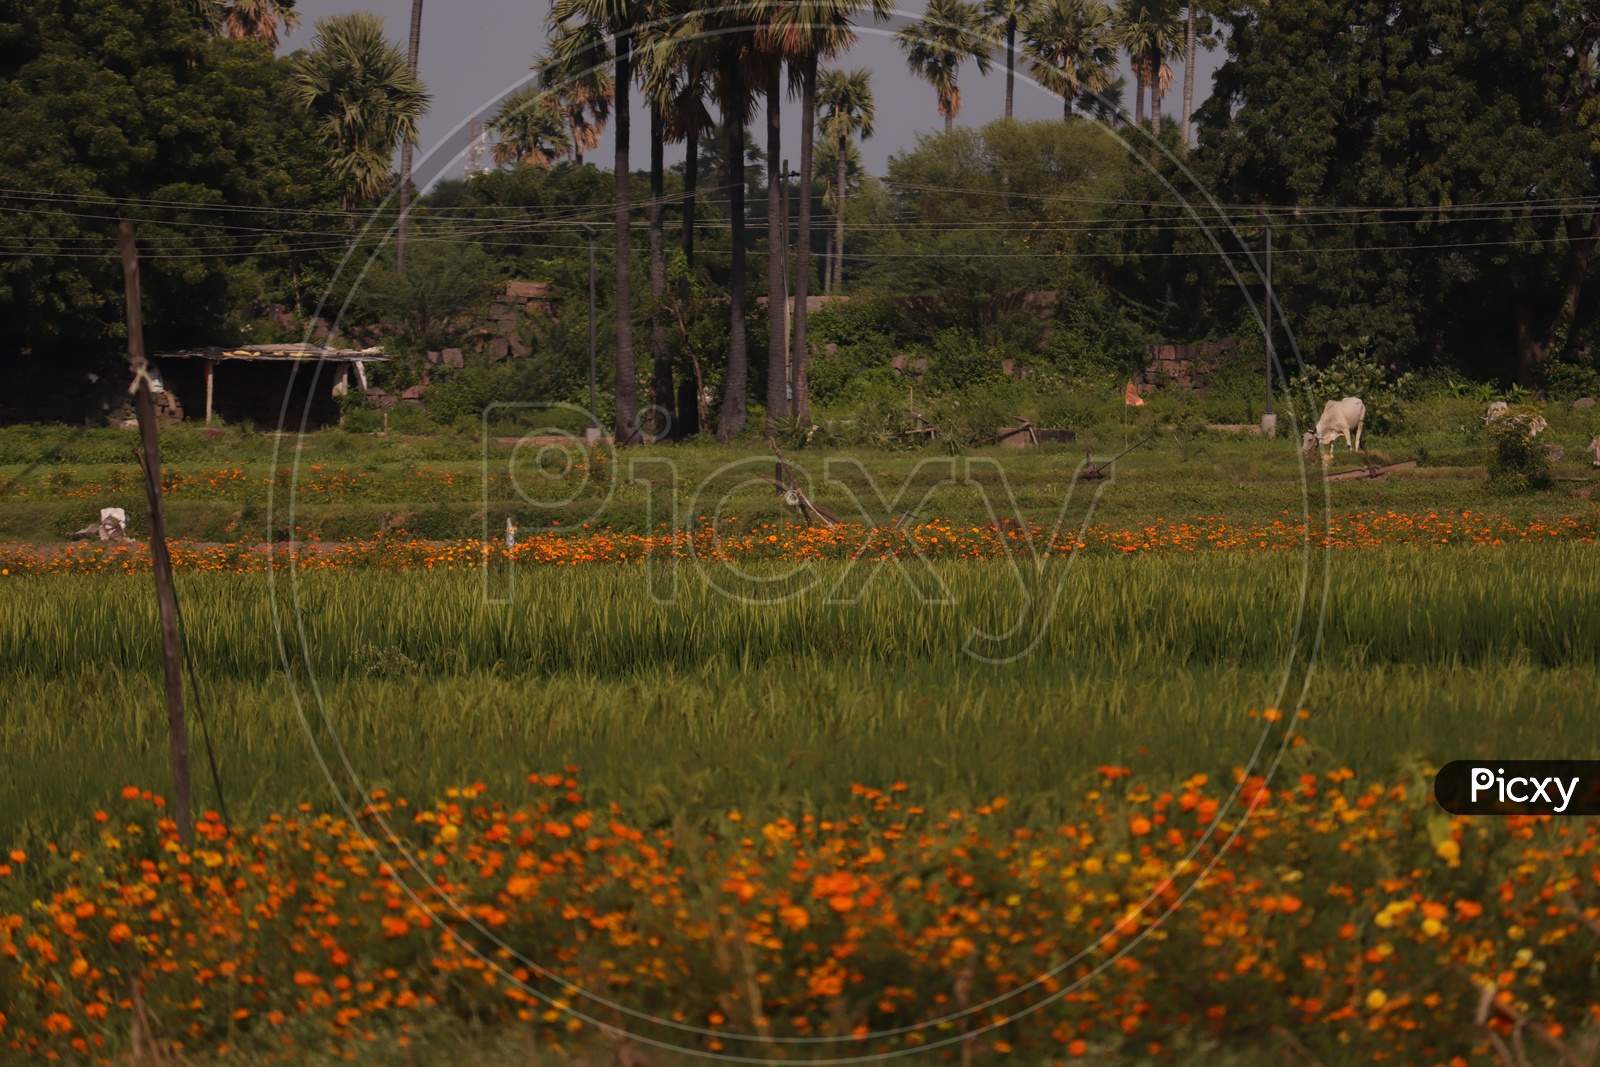 Paddy fields between marigold flowers and raddu plants